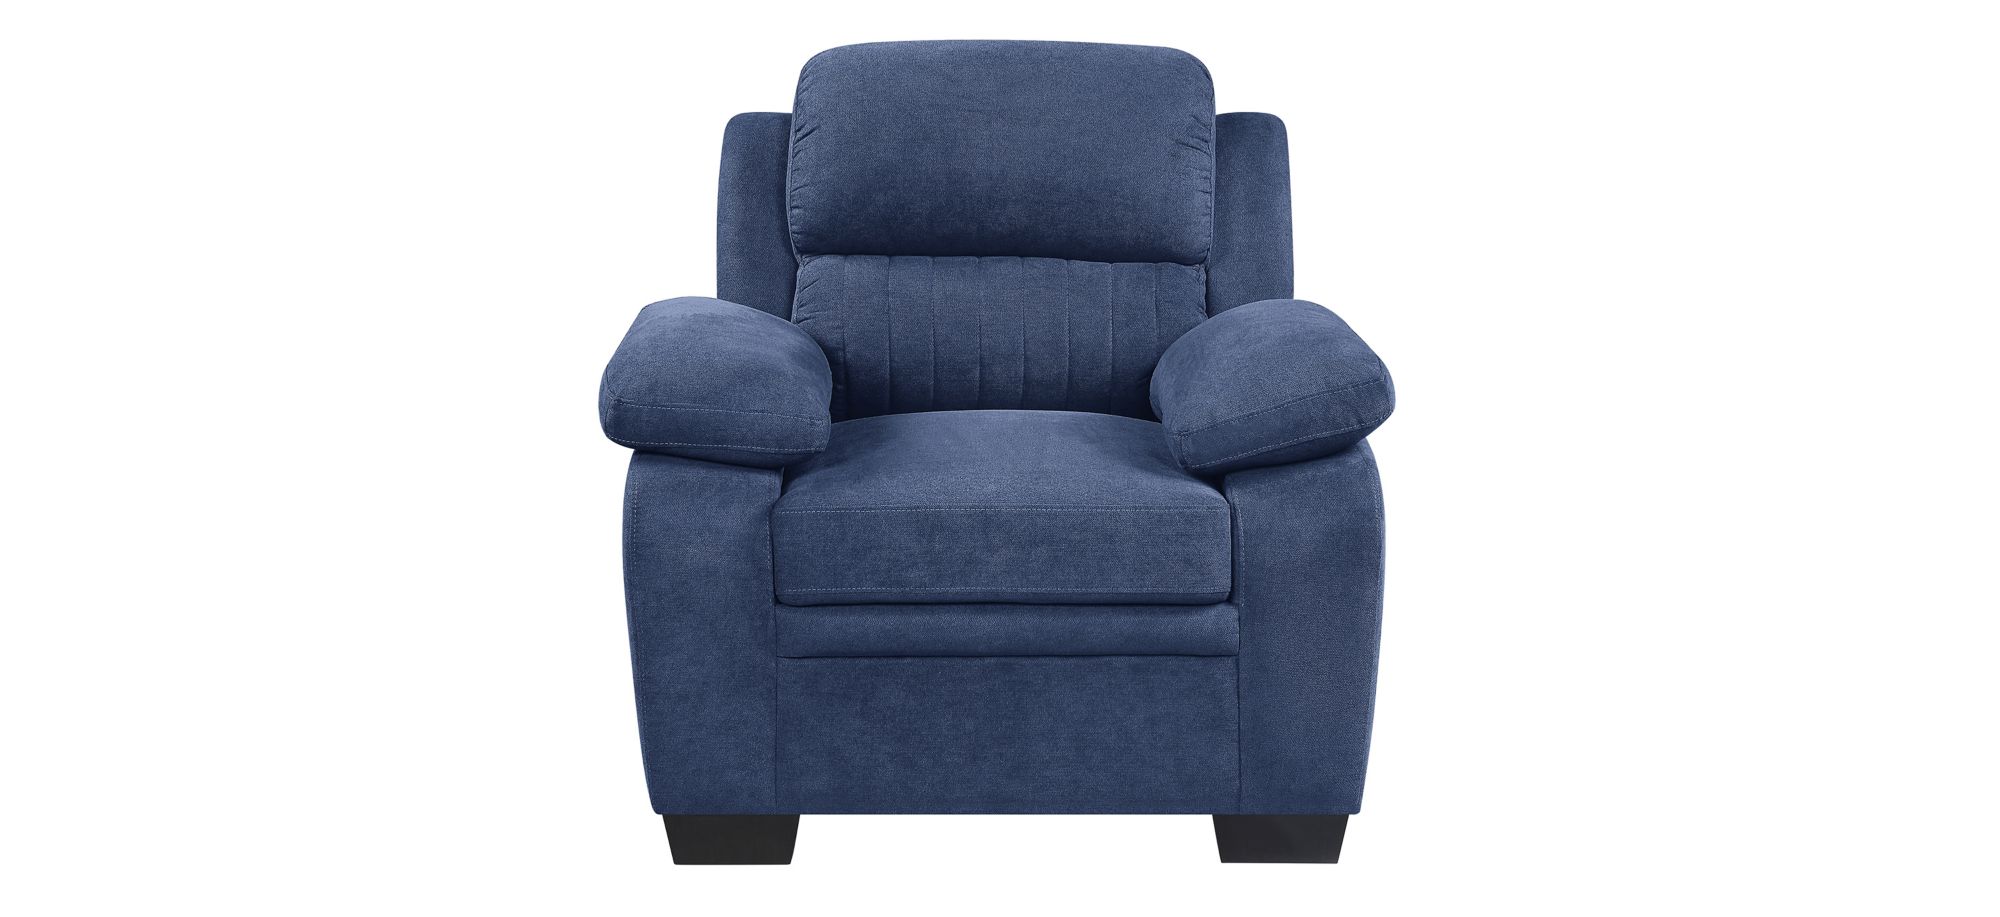 Felicia Chair in Blue by Bellanest